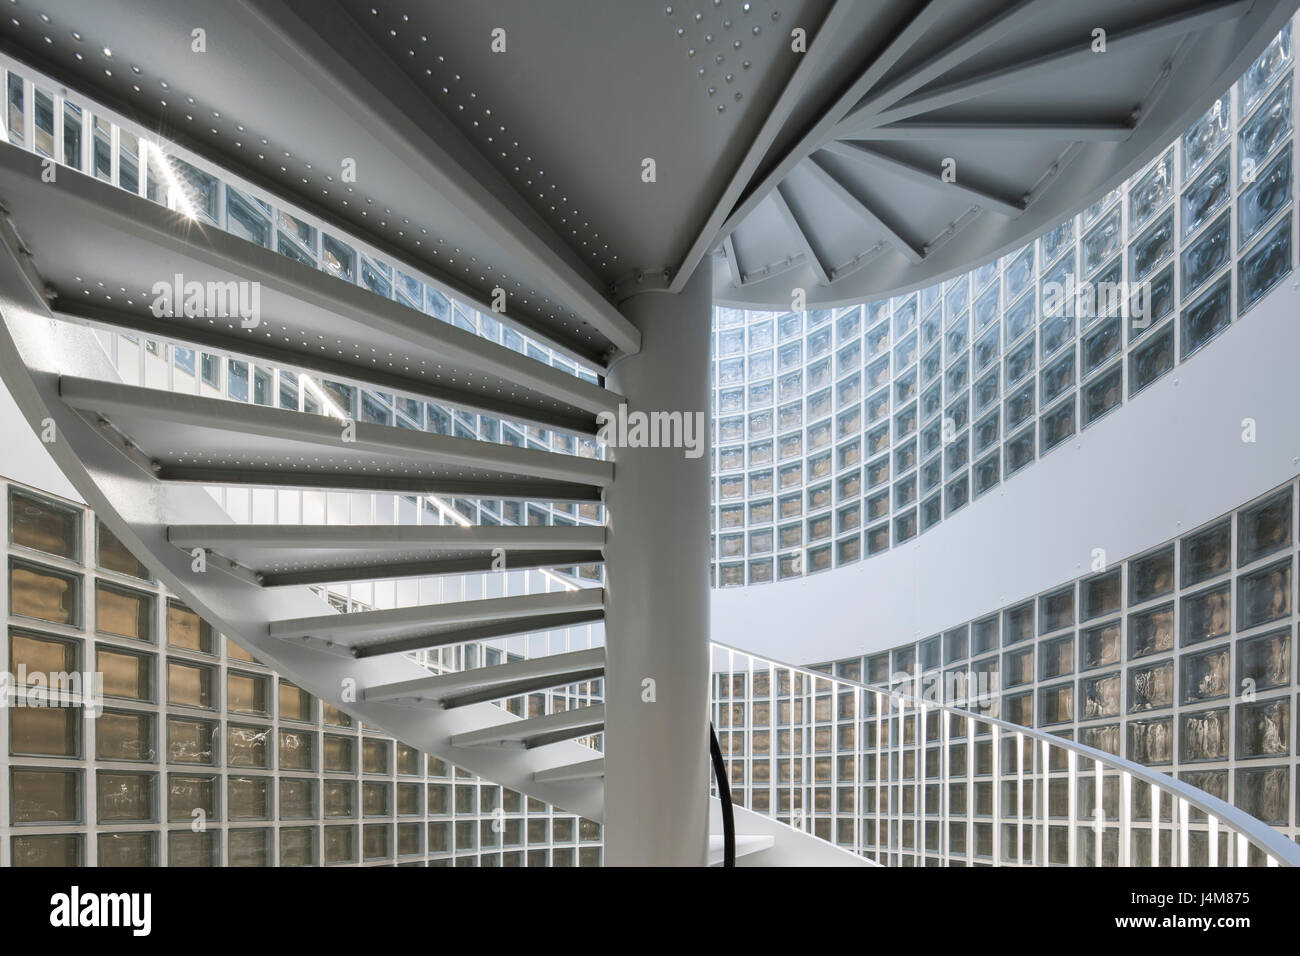 Helical staircase and glass brick facade. Housing Building, Quai Henri IV, Paris, France. Architect: LIN, 2015. Stock Photo